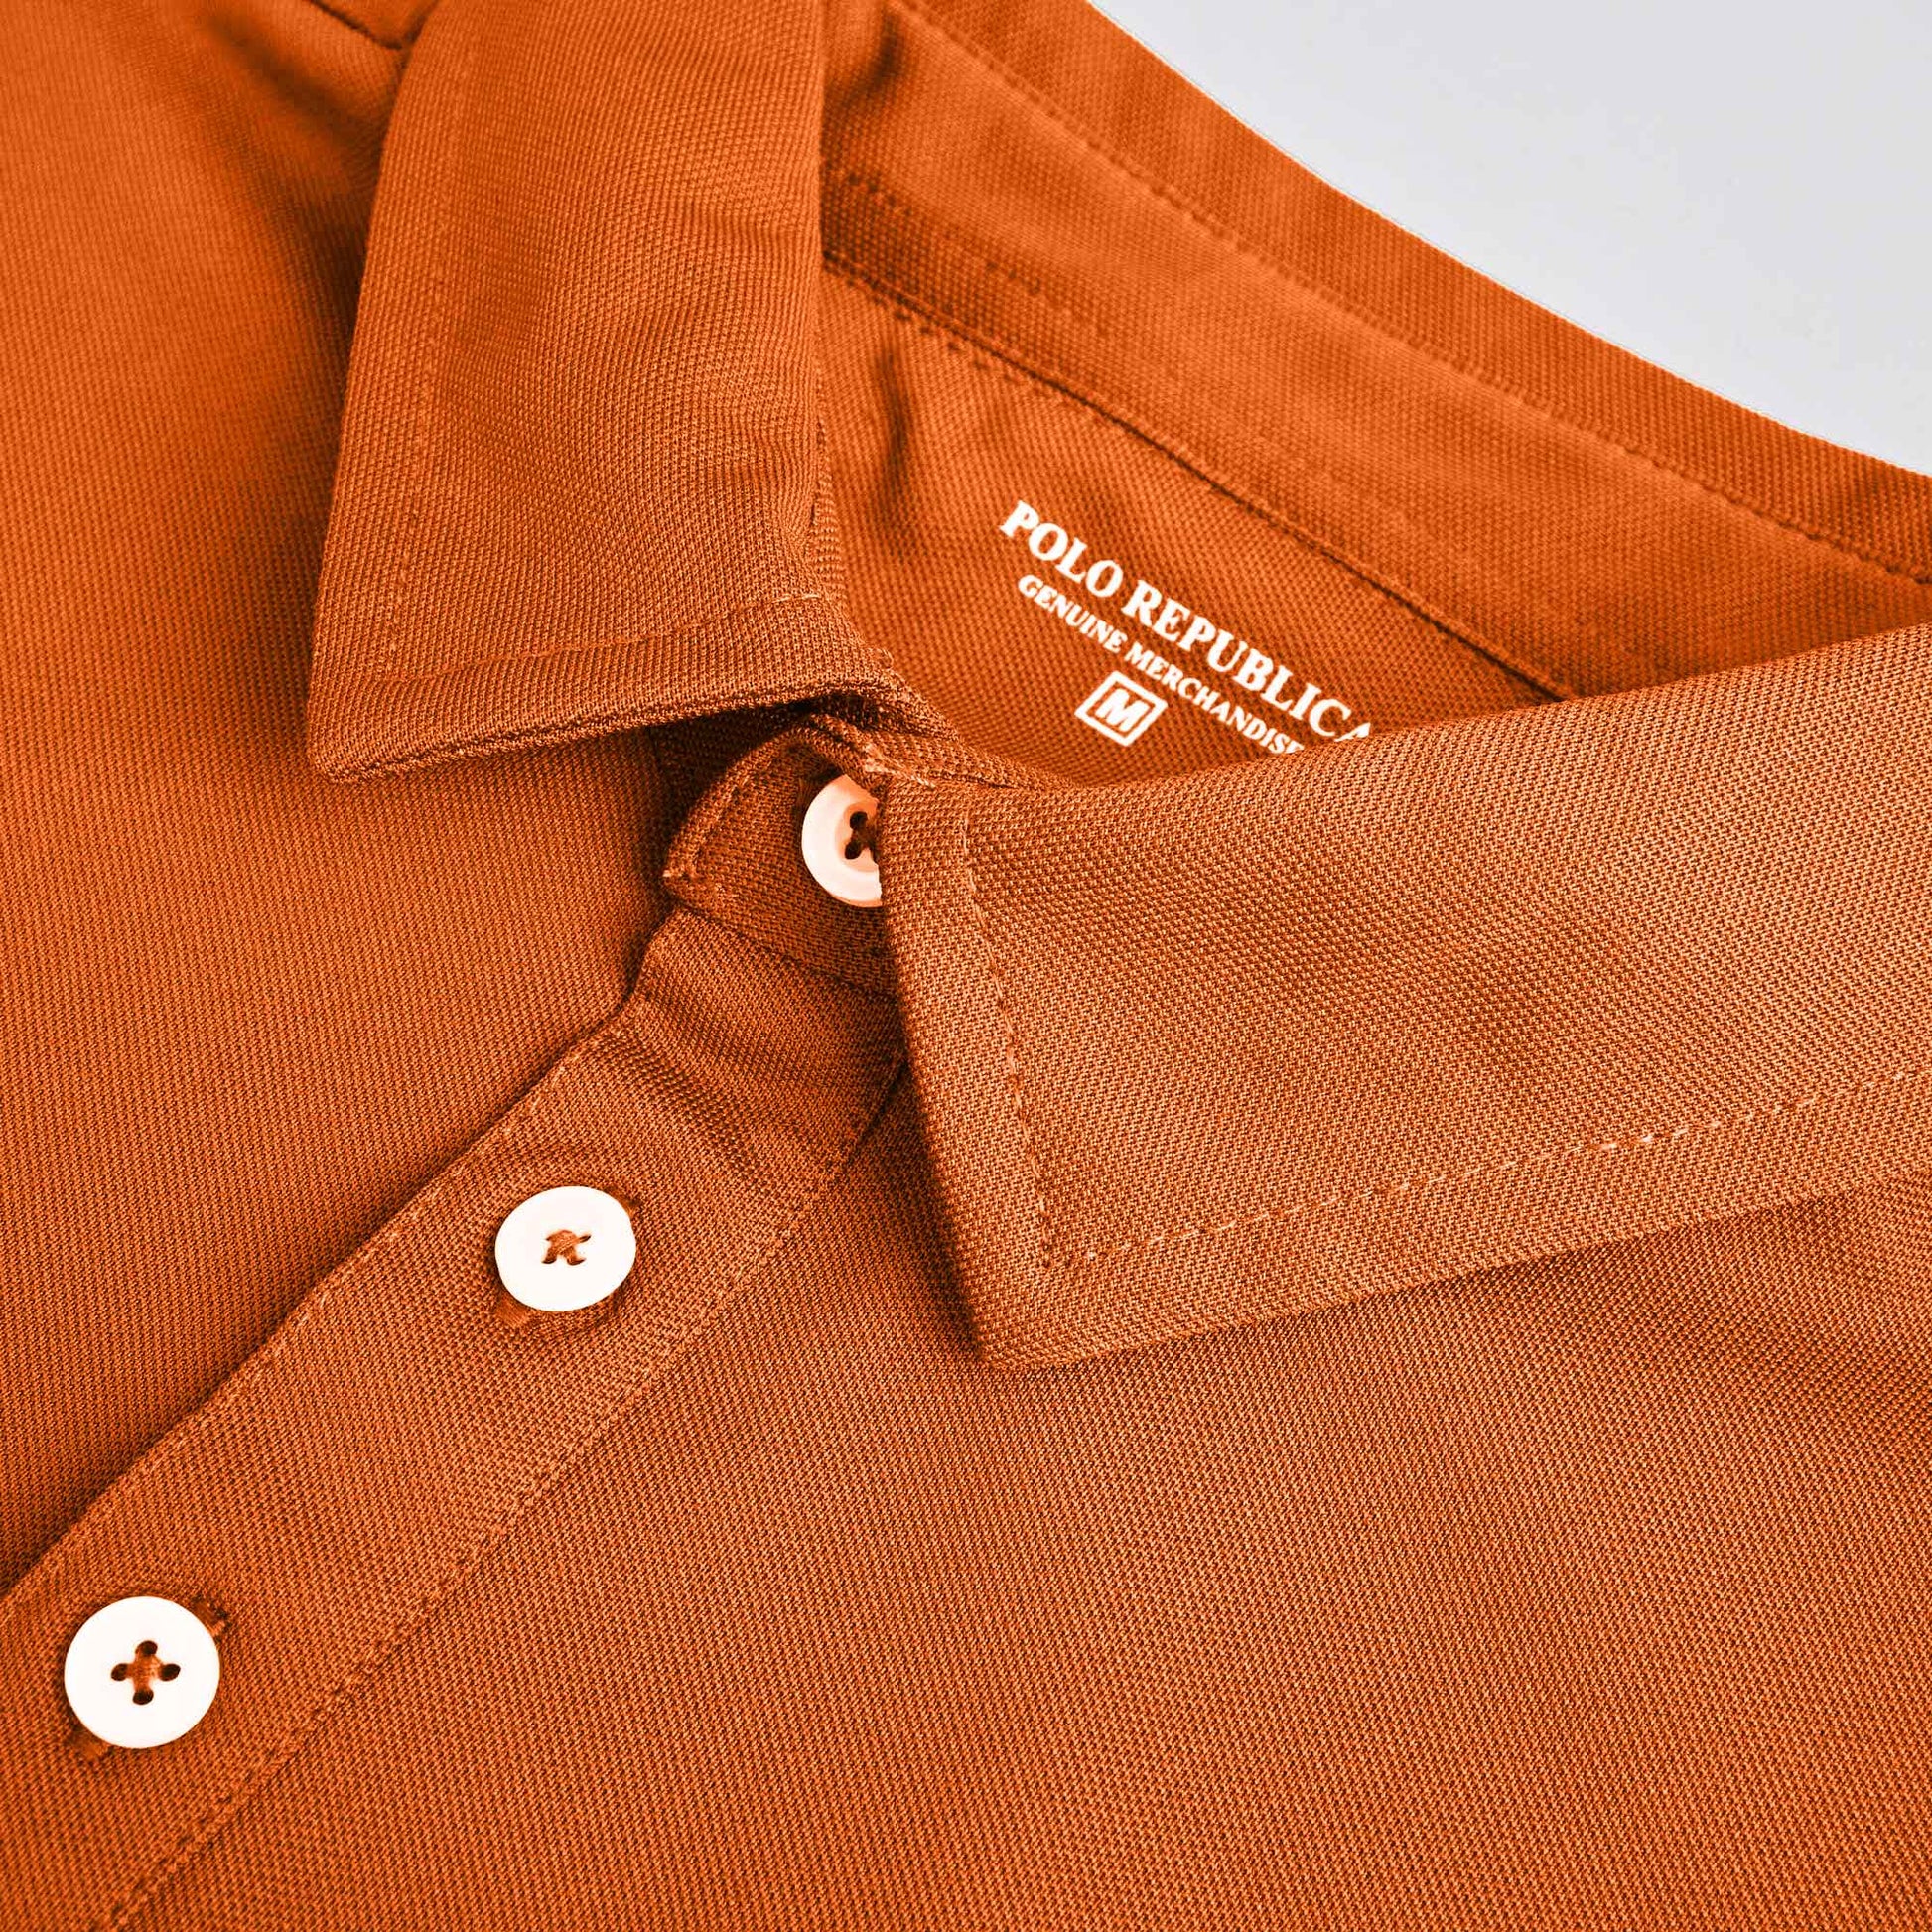 Polo Republica Men's Essentials Tailored Collar Pocket Polo Shirt Orange